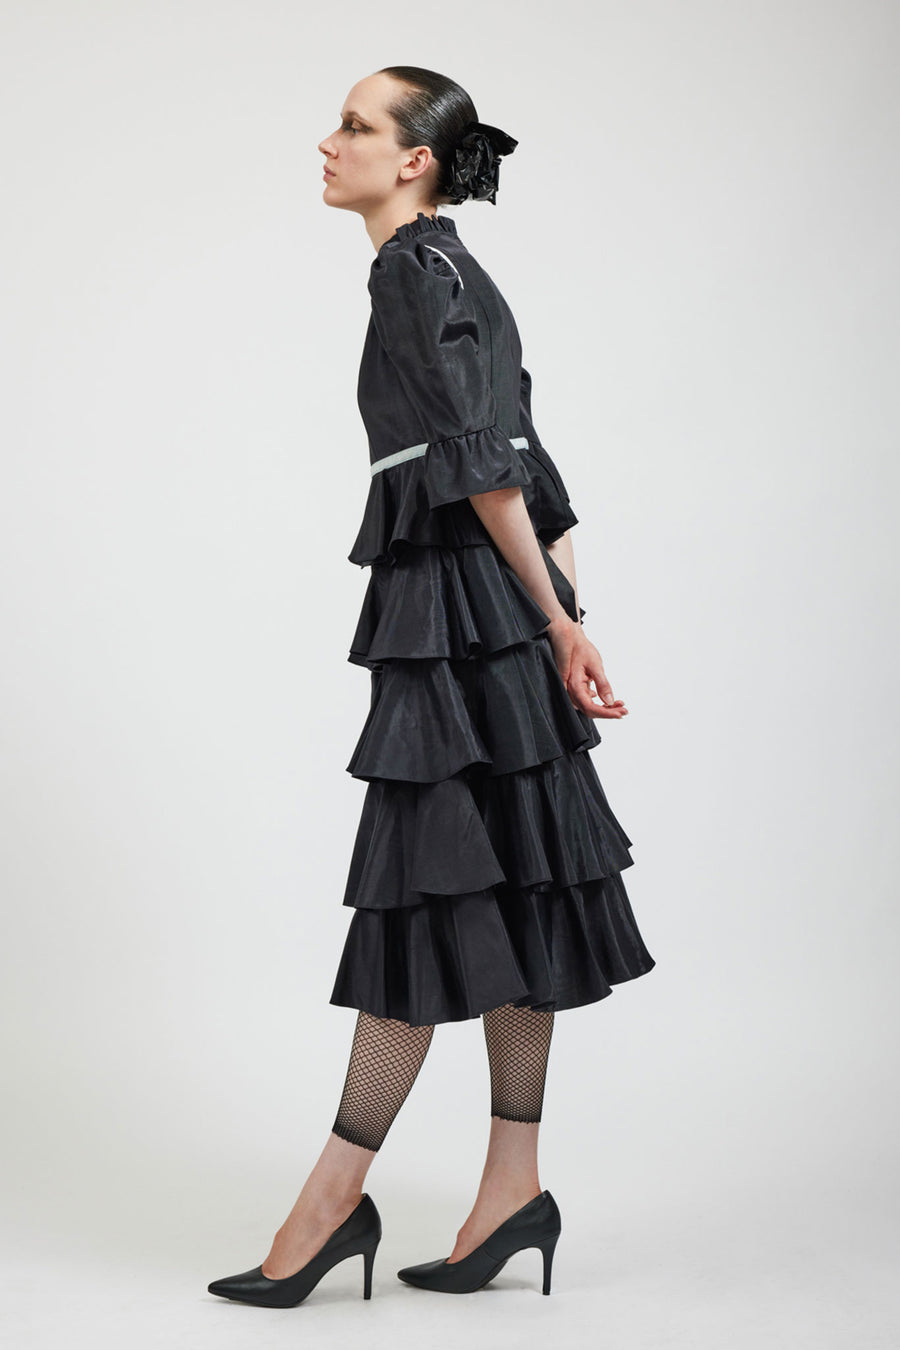 BATSHEVA - Simone Dress in Black Moiré